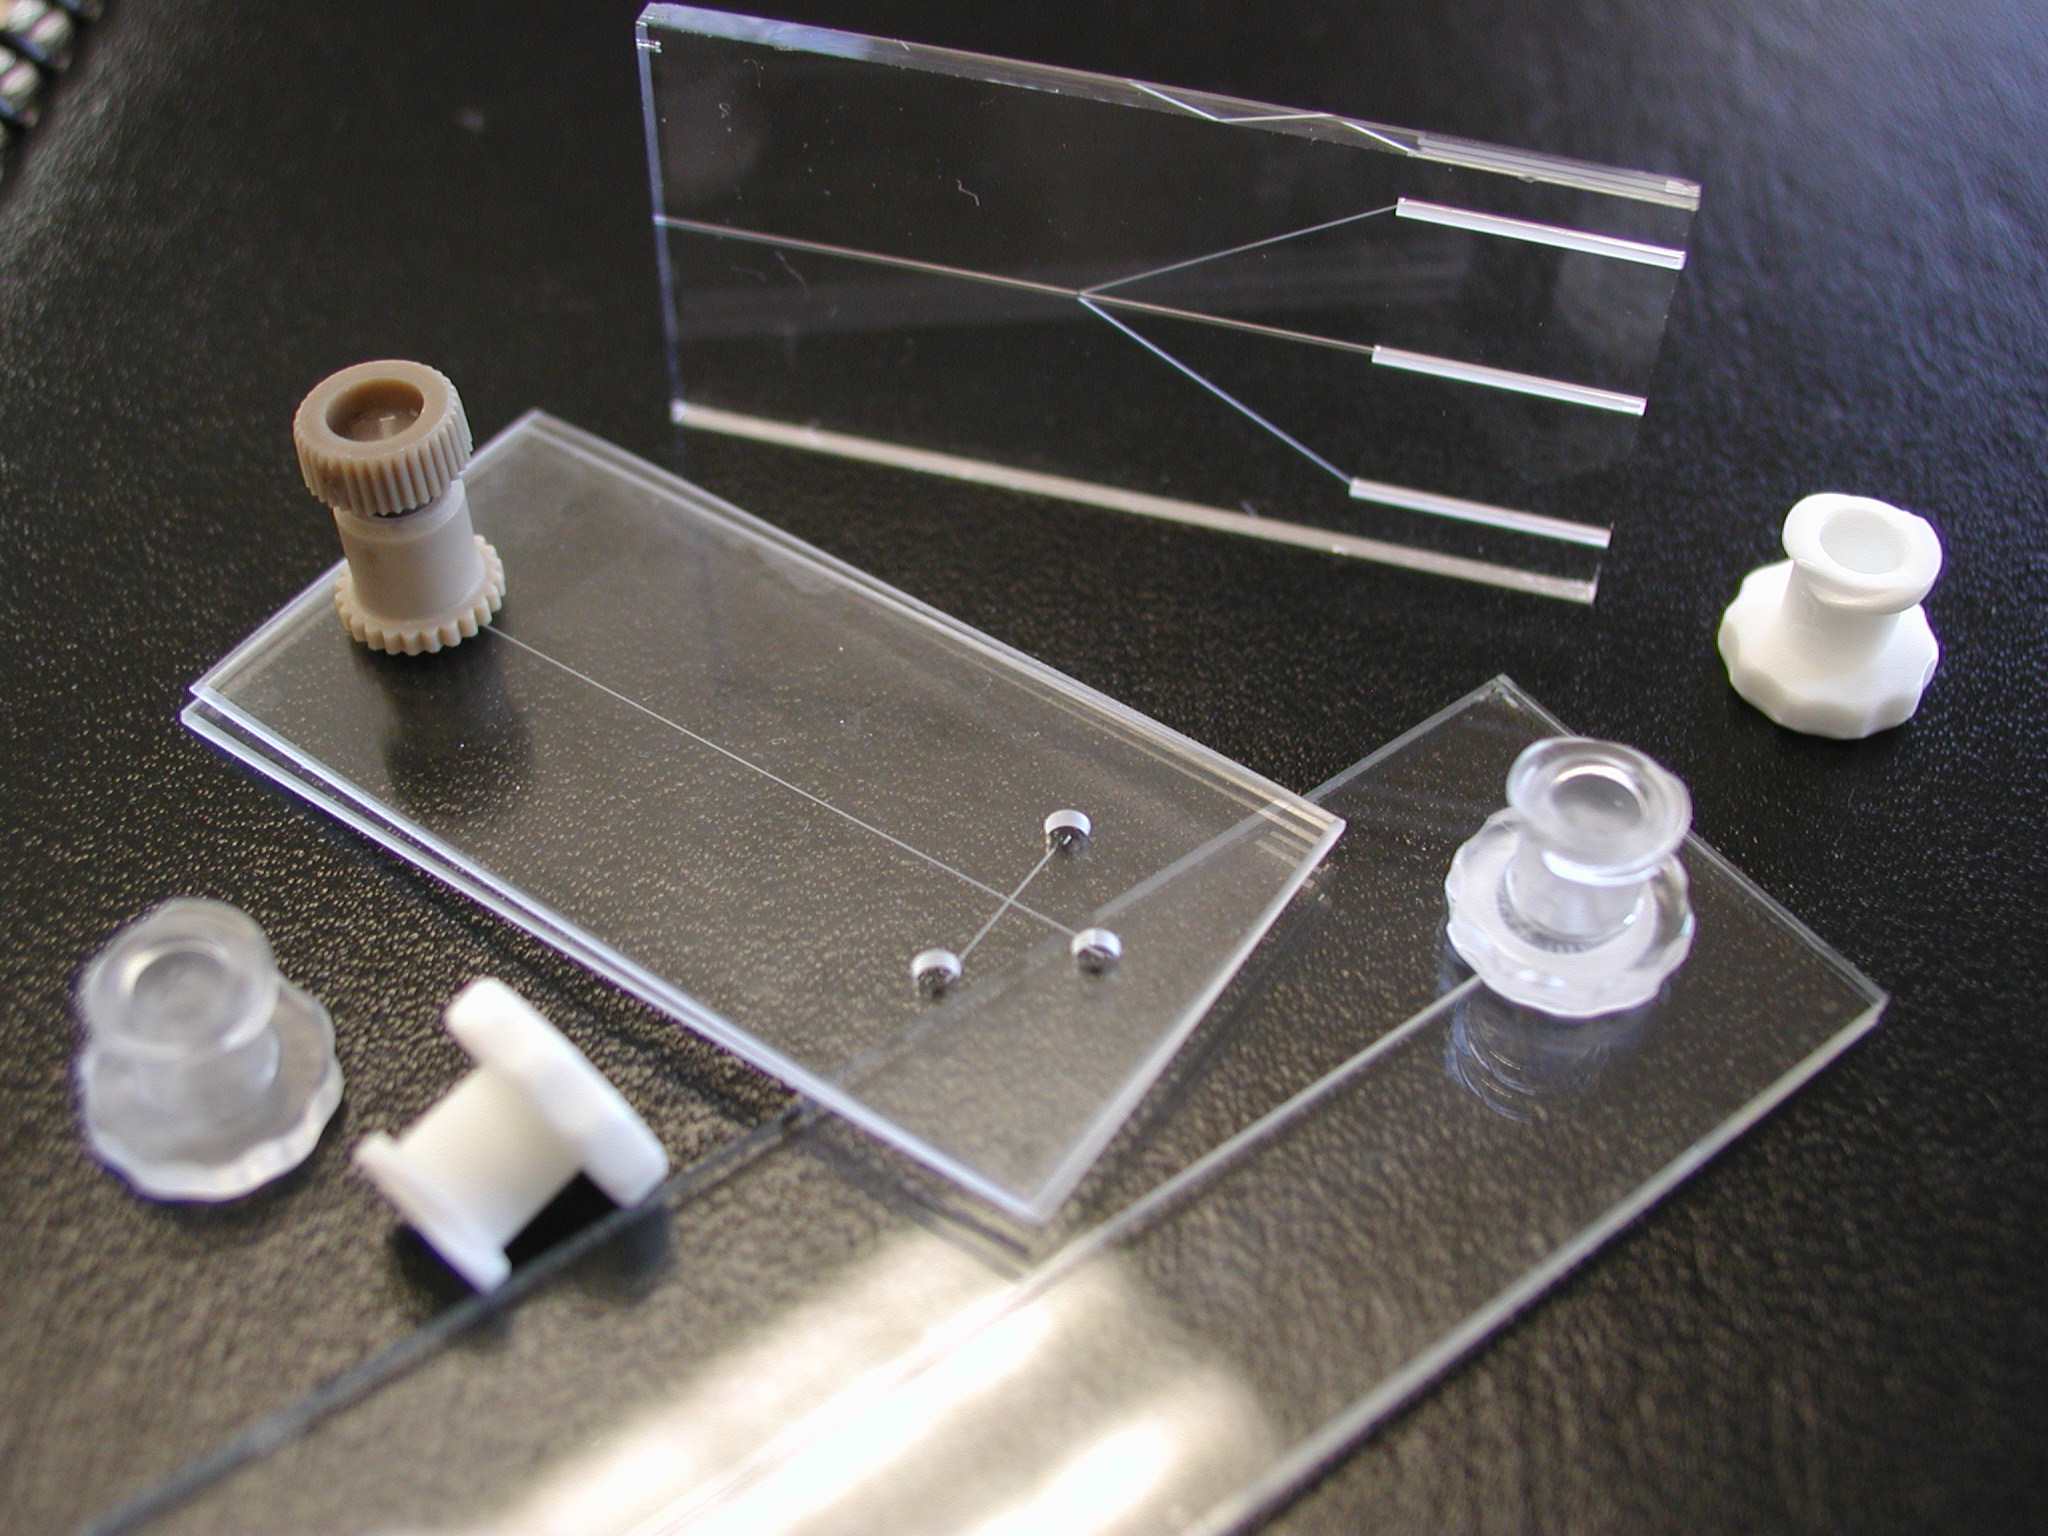 HD Assortment of microfluidic chips